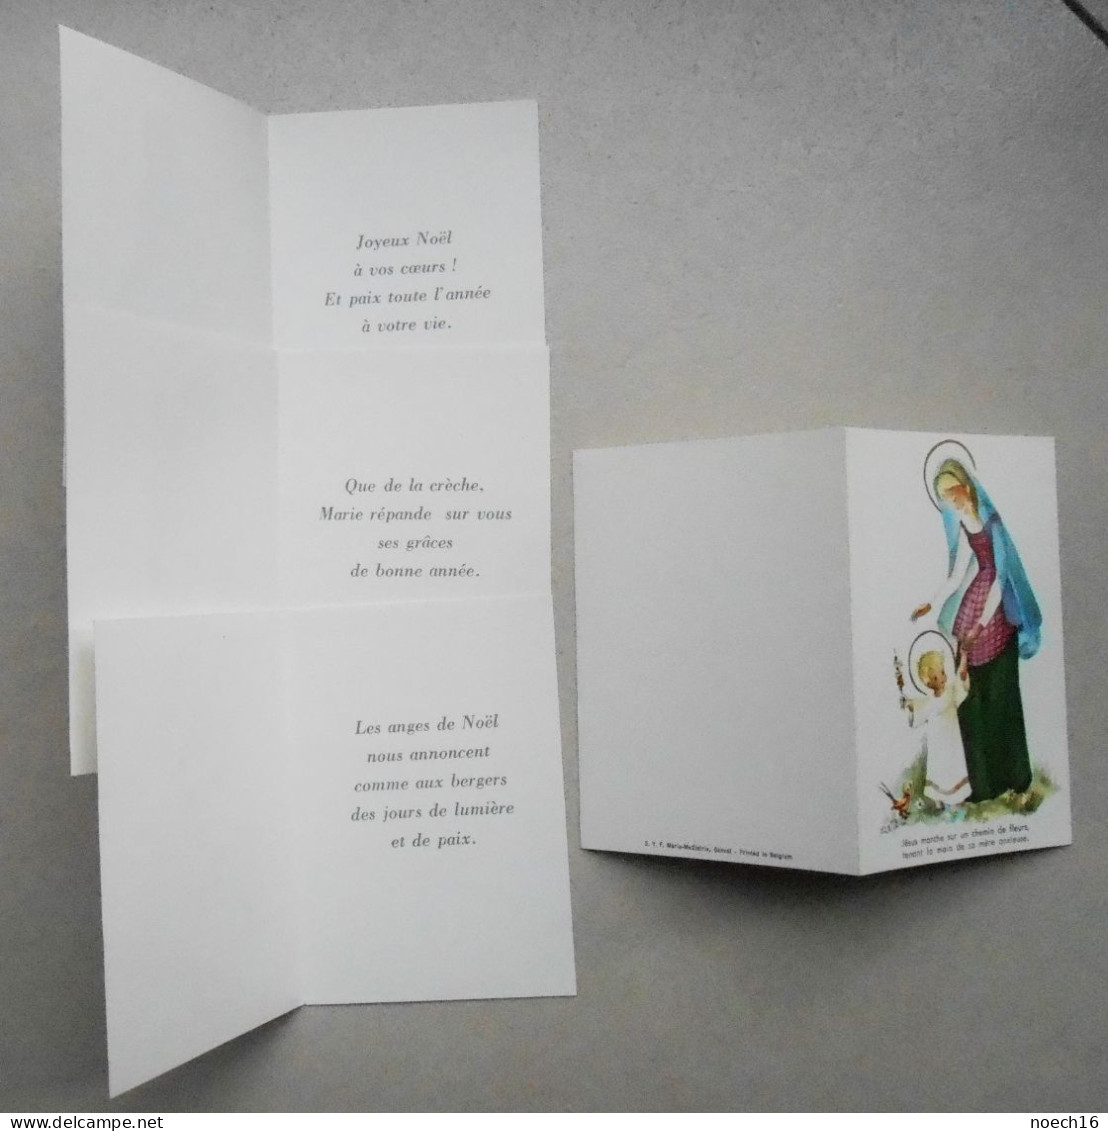 Lot 160 Images religieuses enfantines. Holy cards. Illustrateurs Pennyless, Gouppy, Linen, Englebert, Boland, Fovel.....